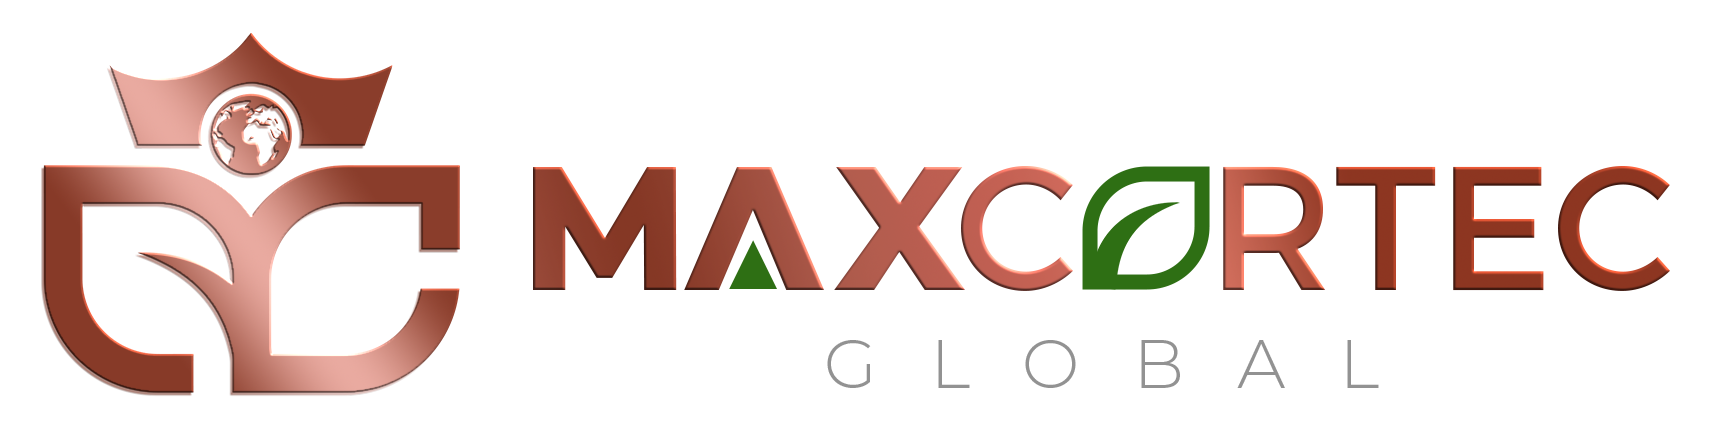 MaxCortec Global